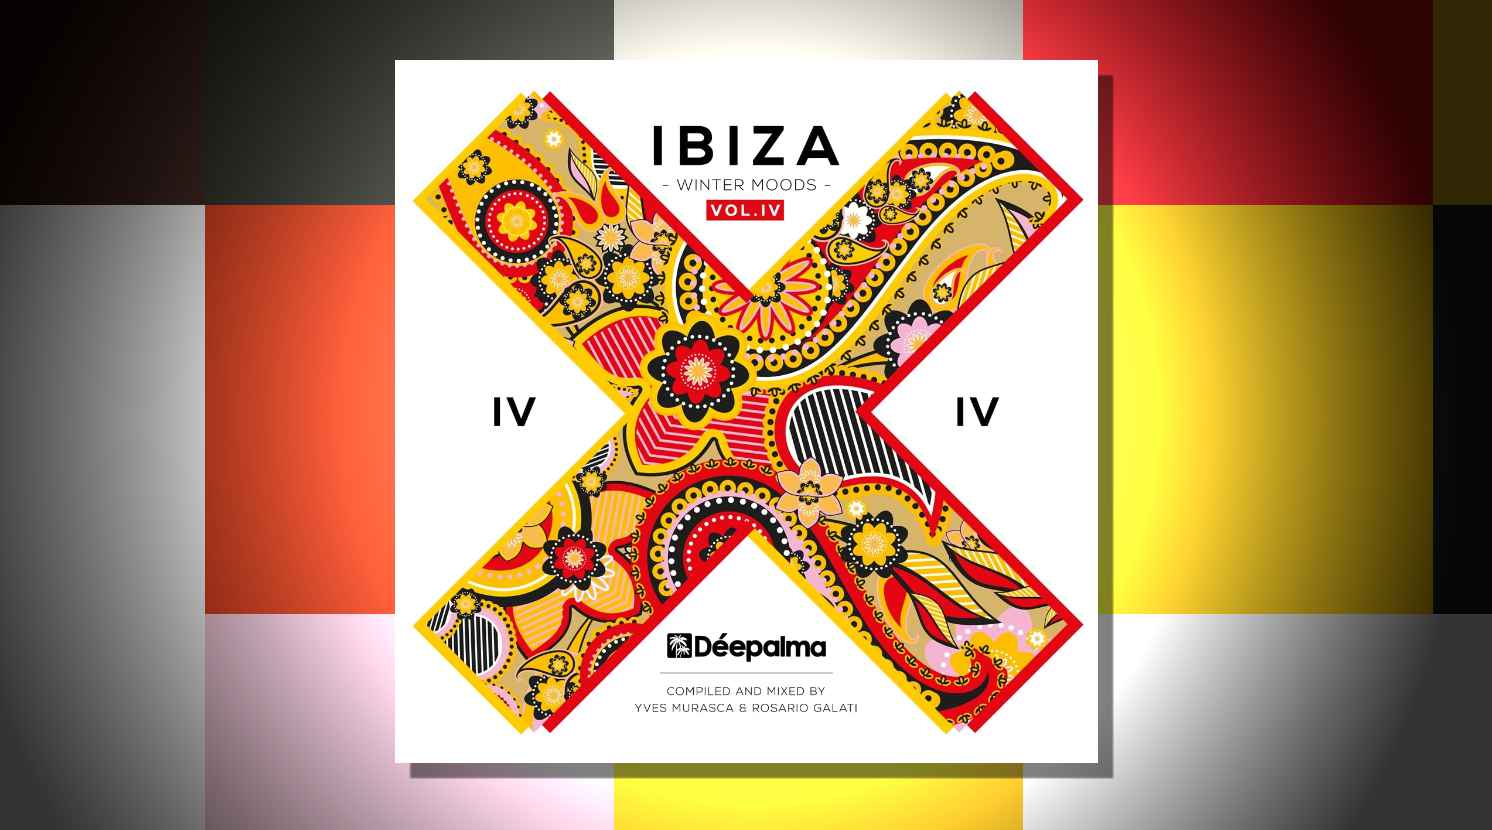 Ibiza Winter Moods 4 CD-Cover